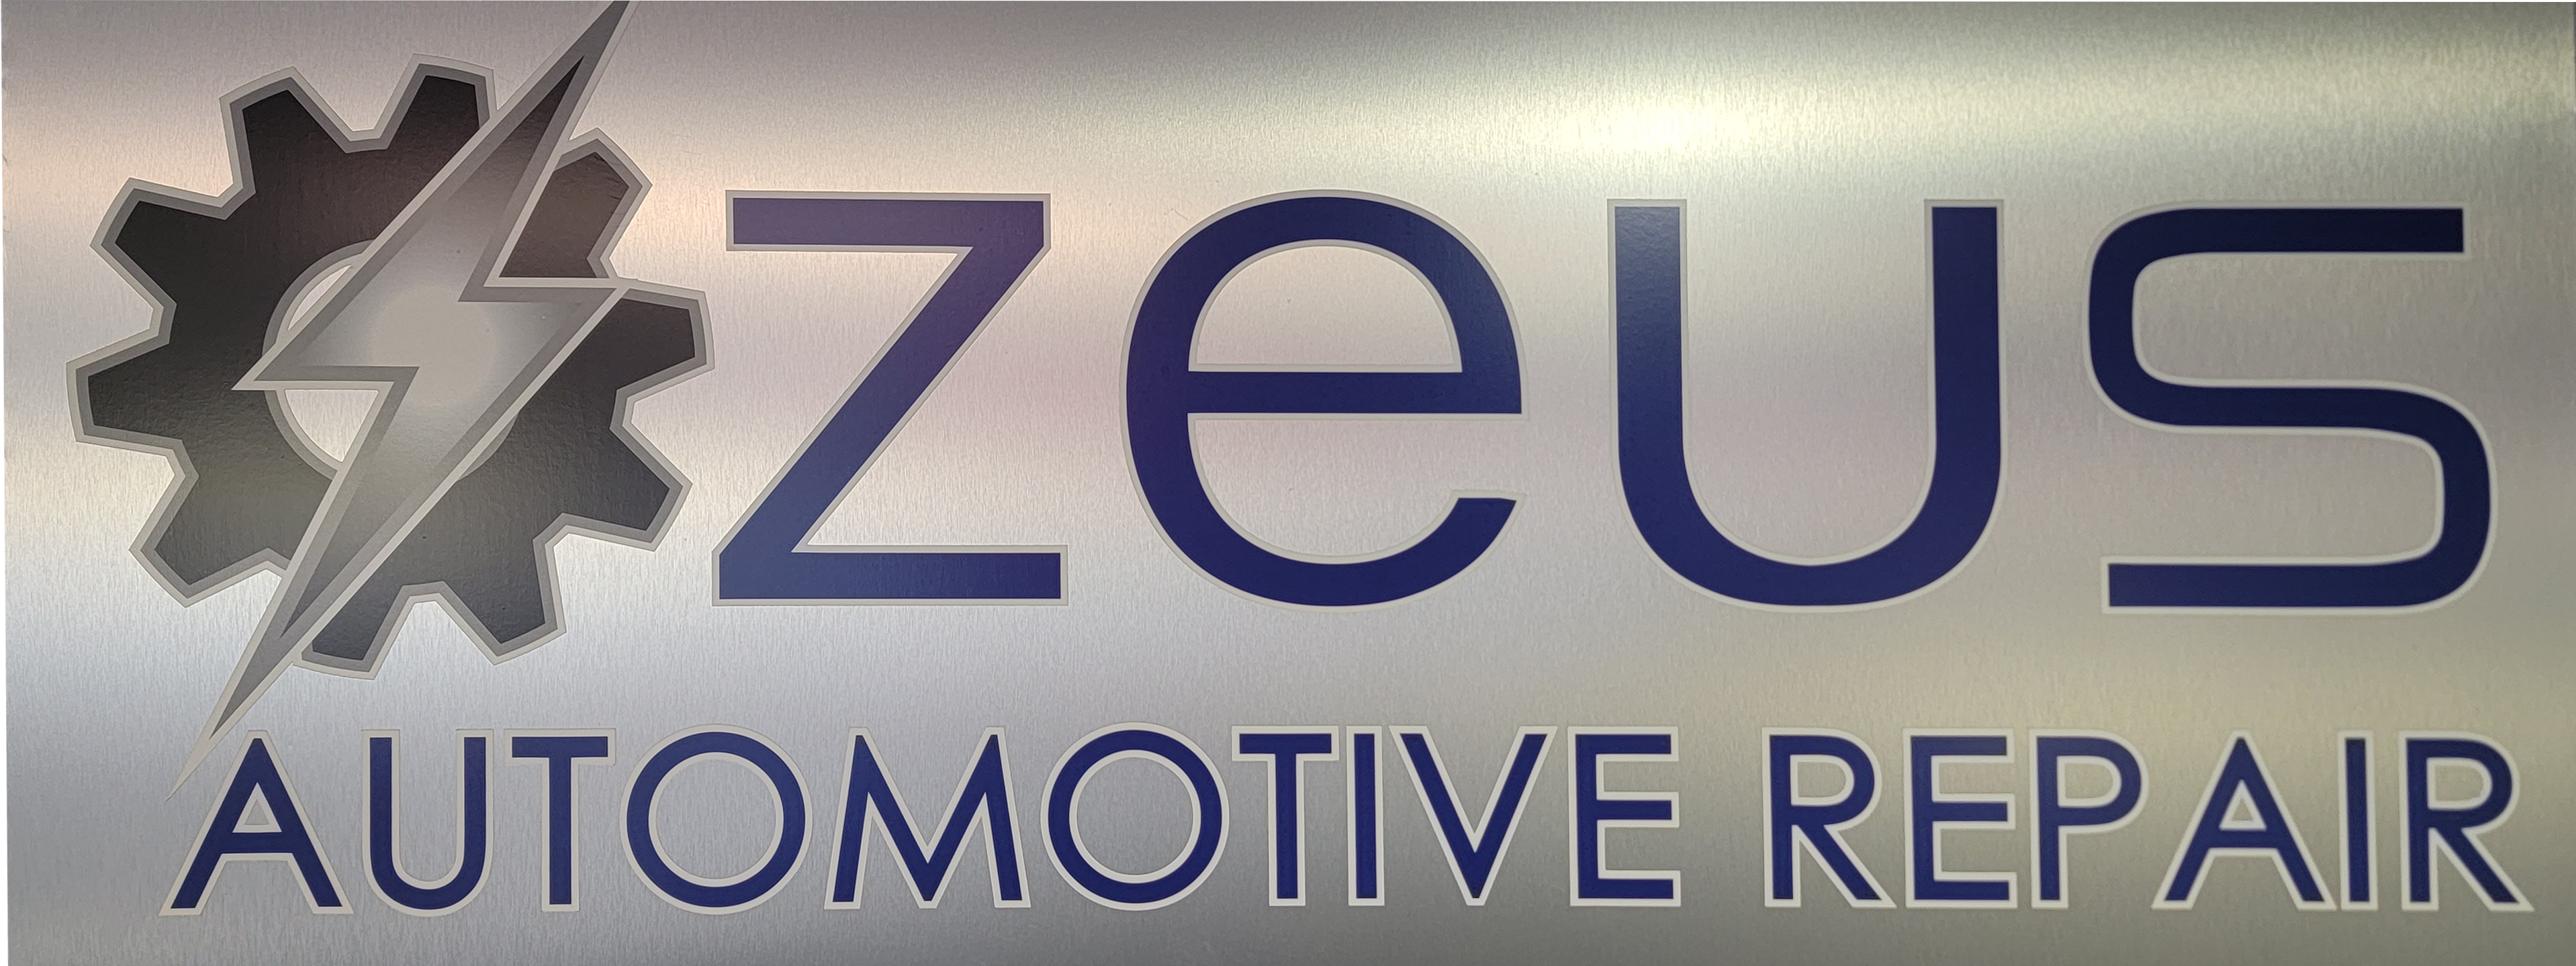 Zeus Automotive Repair 